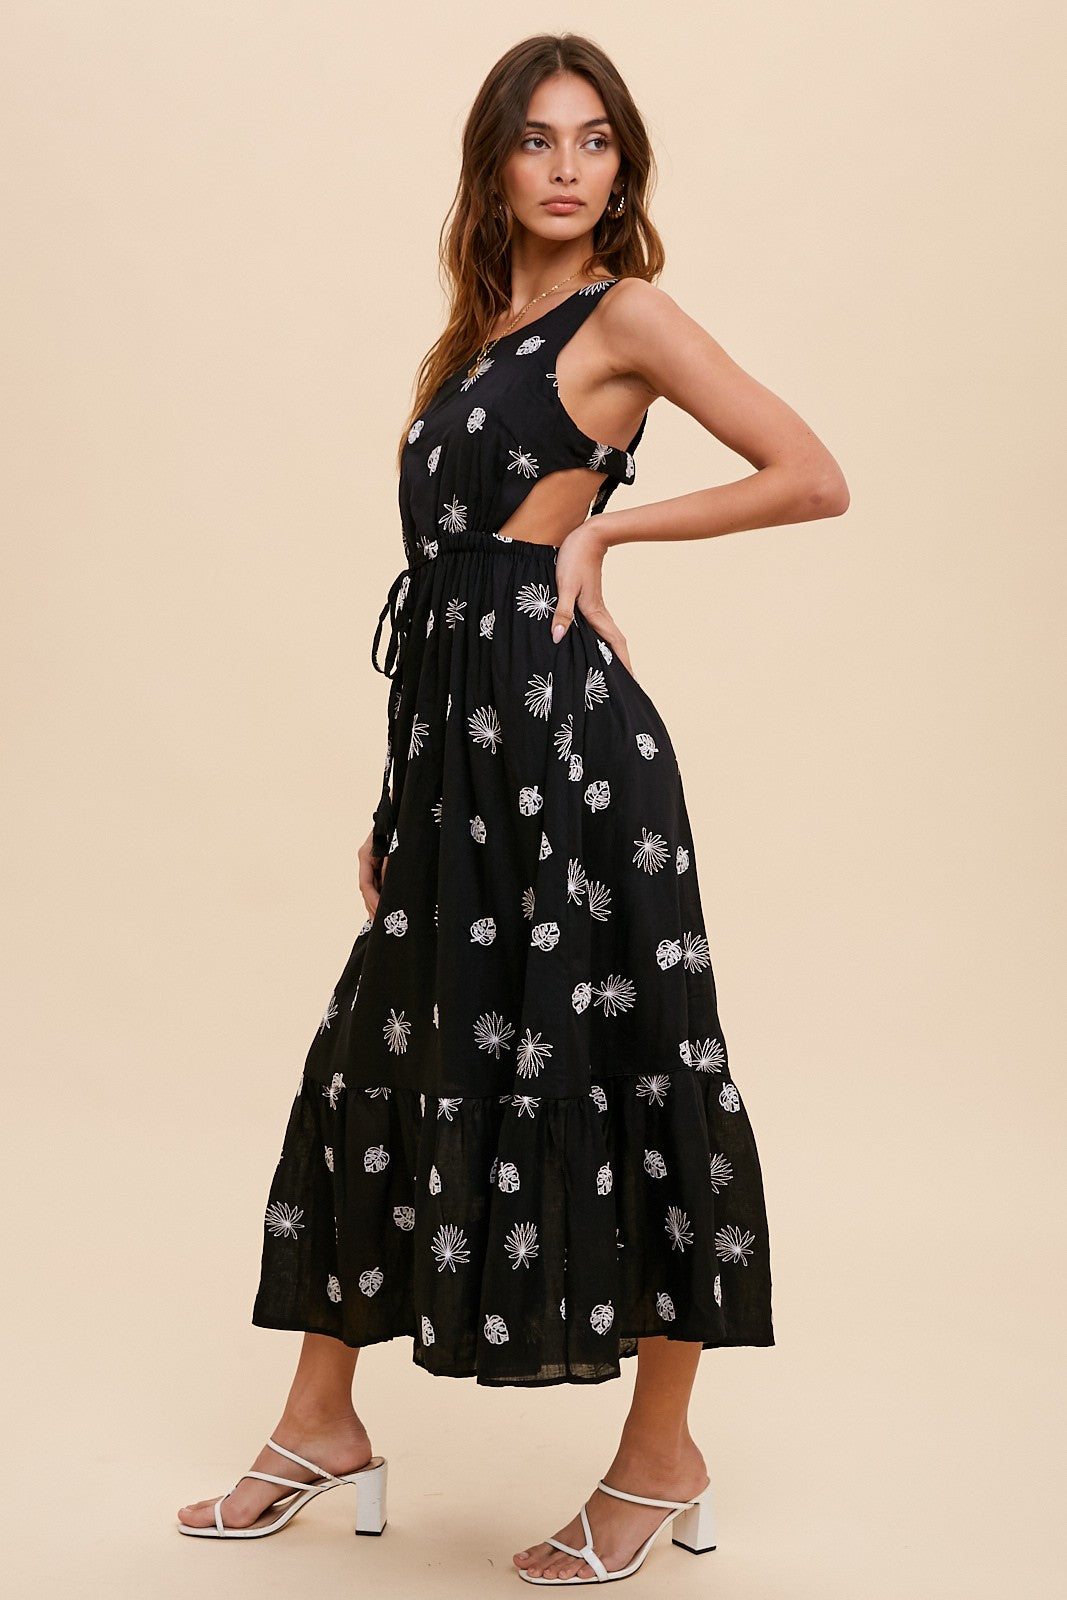 Malibu B/W Embroidered Dress